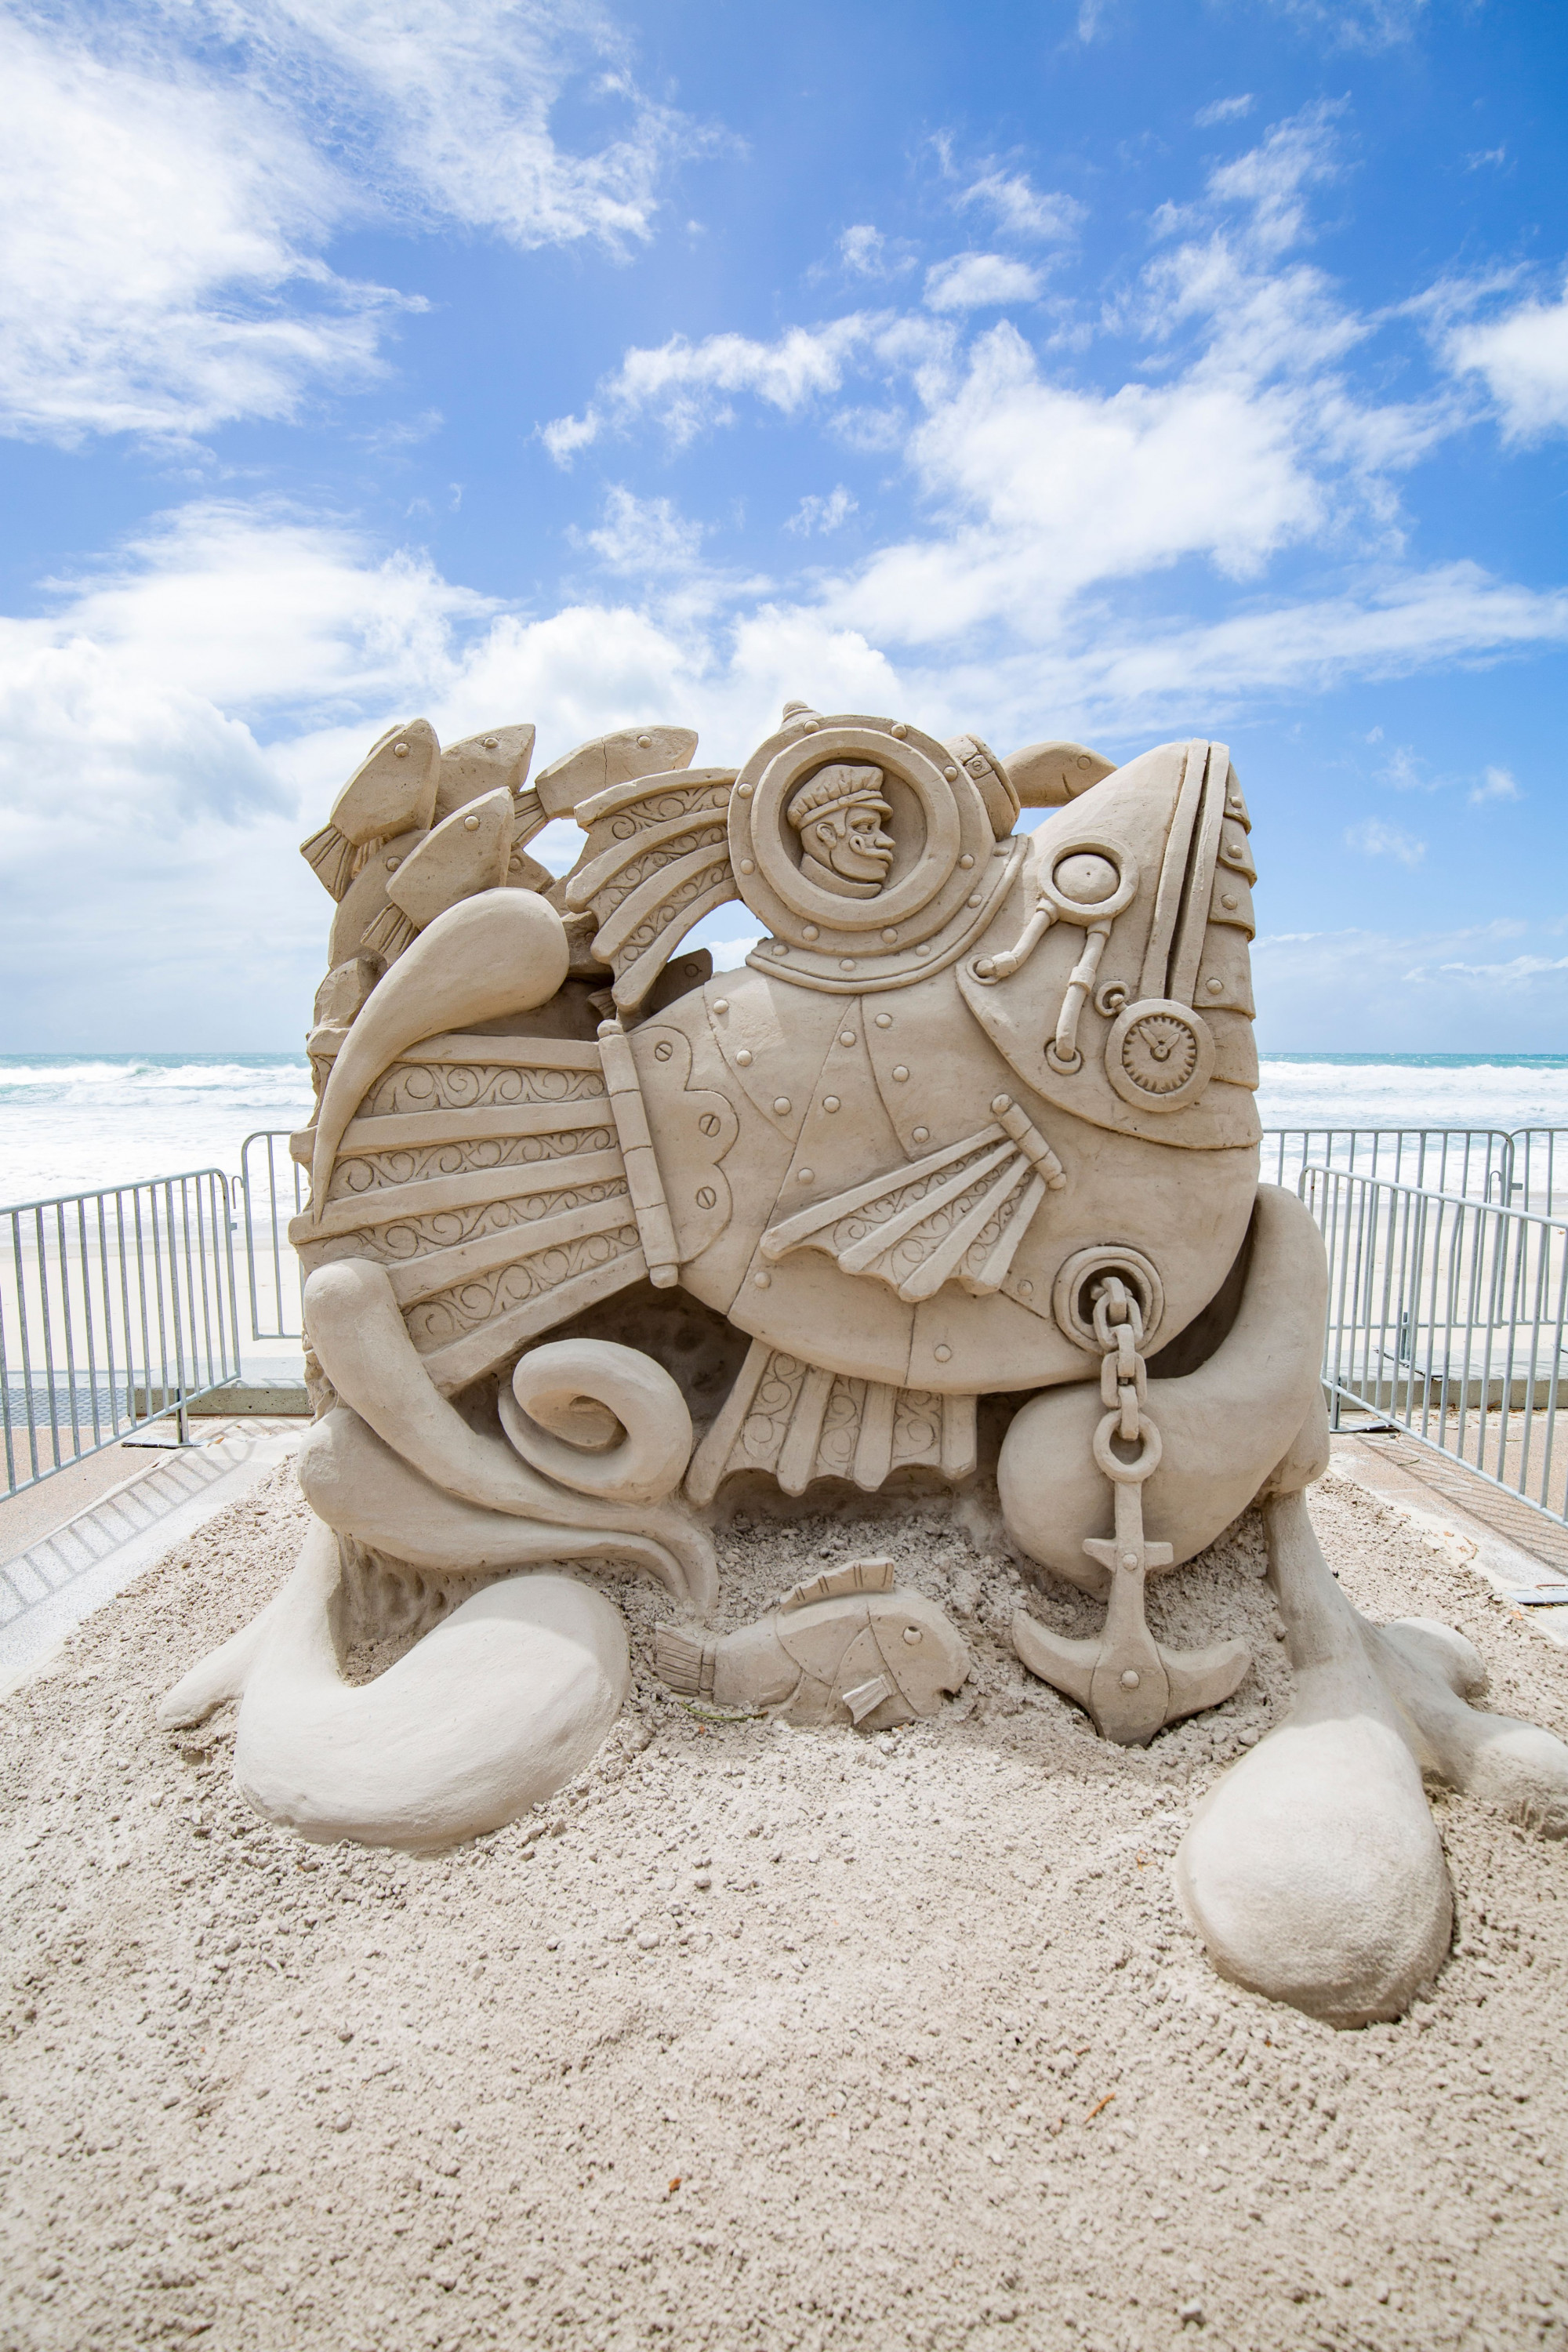 a sand sculpture of a fish